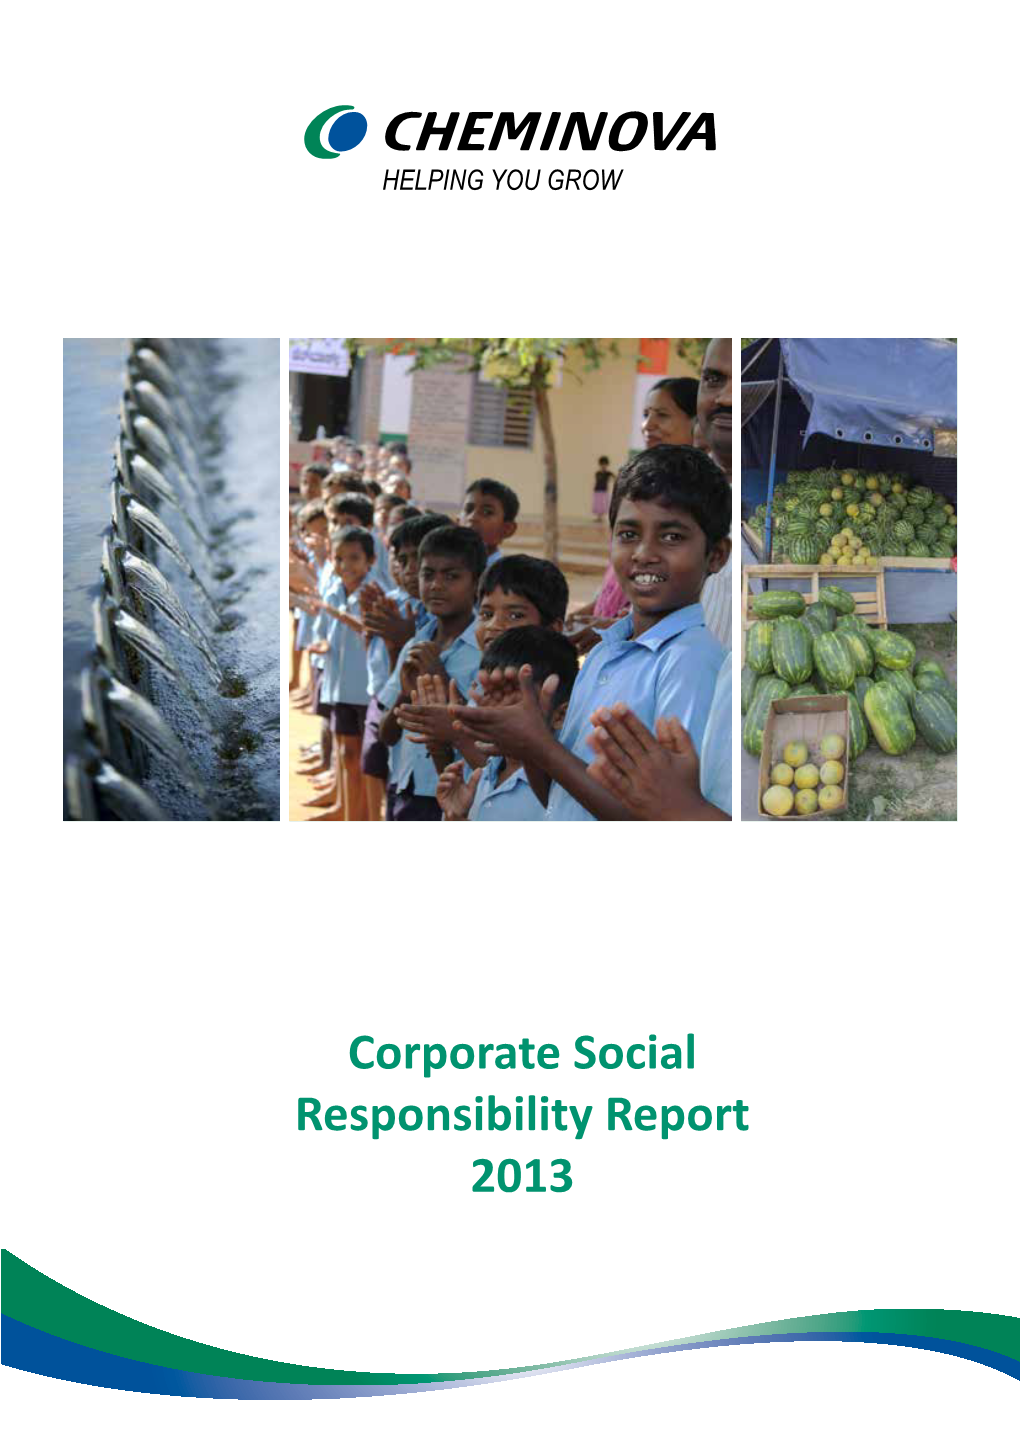 2013 Corporate Social Responsibility (CSR) Report